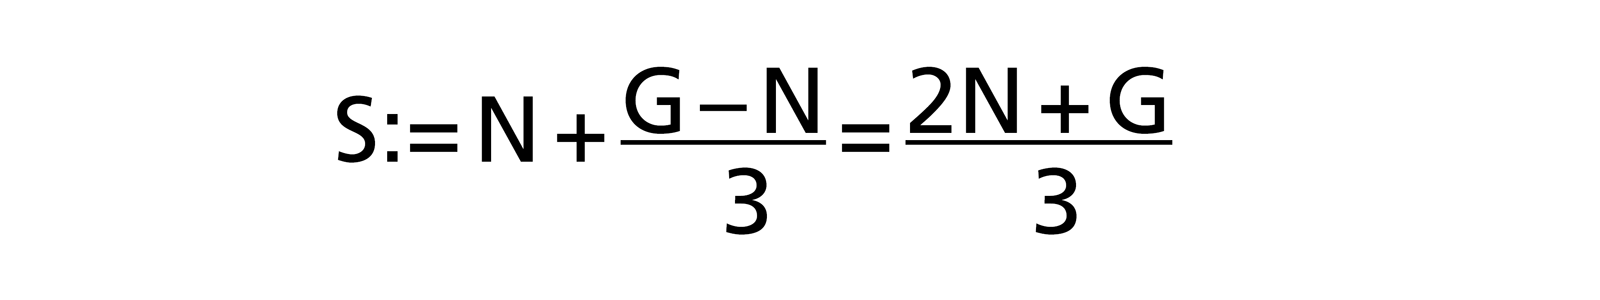 Estimation formula acc. Reiter (optimism correction): S:= (2N + G) / 3